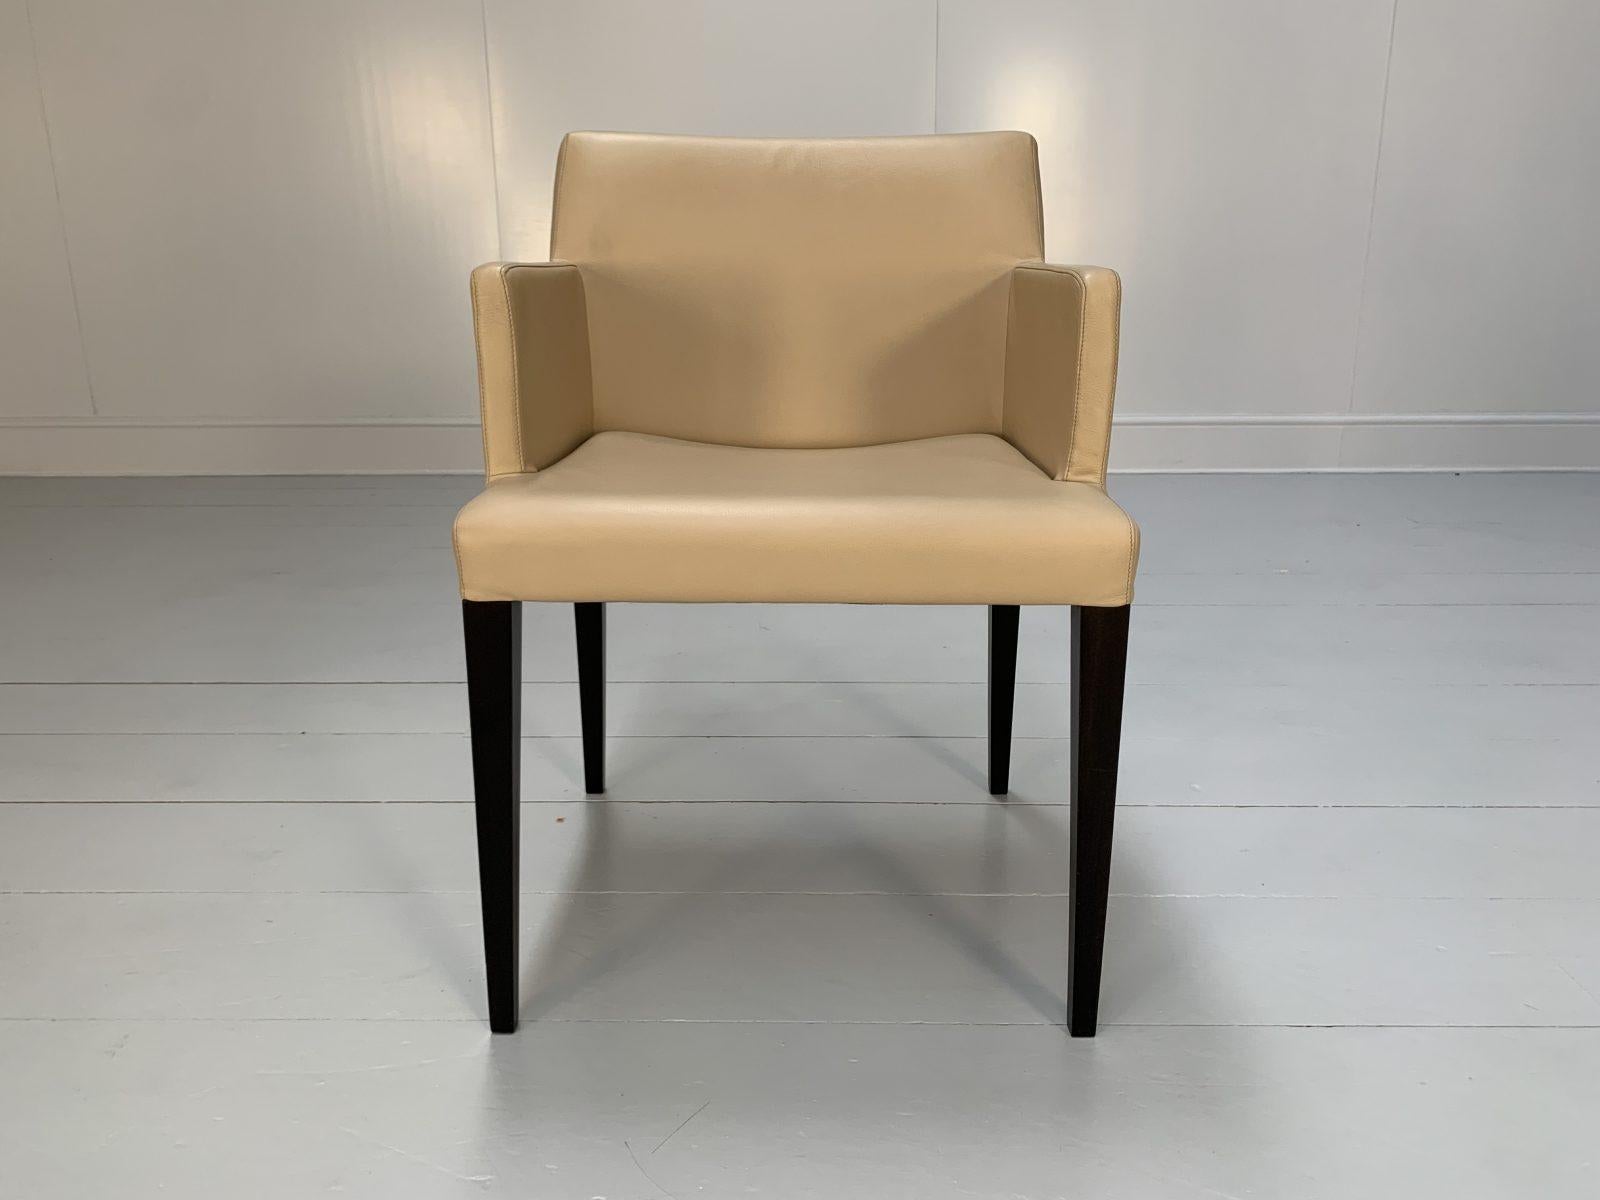 Suite of 6 Poltrona Frau “Liz B” Dining Chairs – In Brown “Pelle Frau” Leather 2